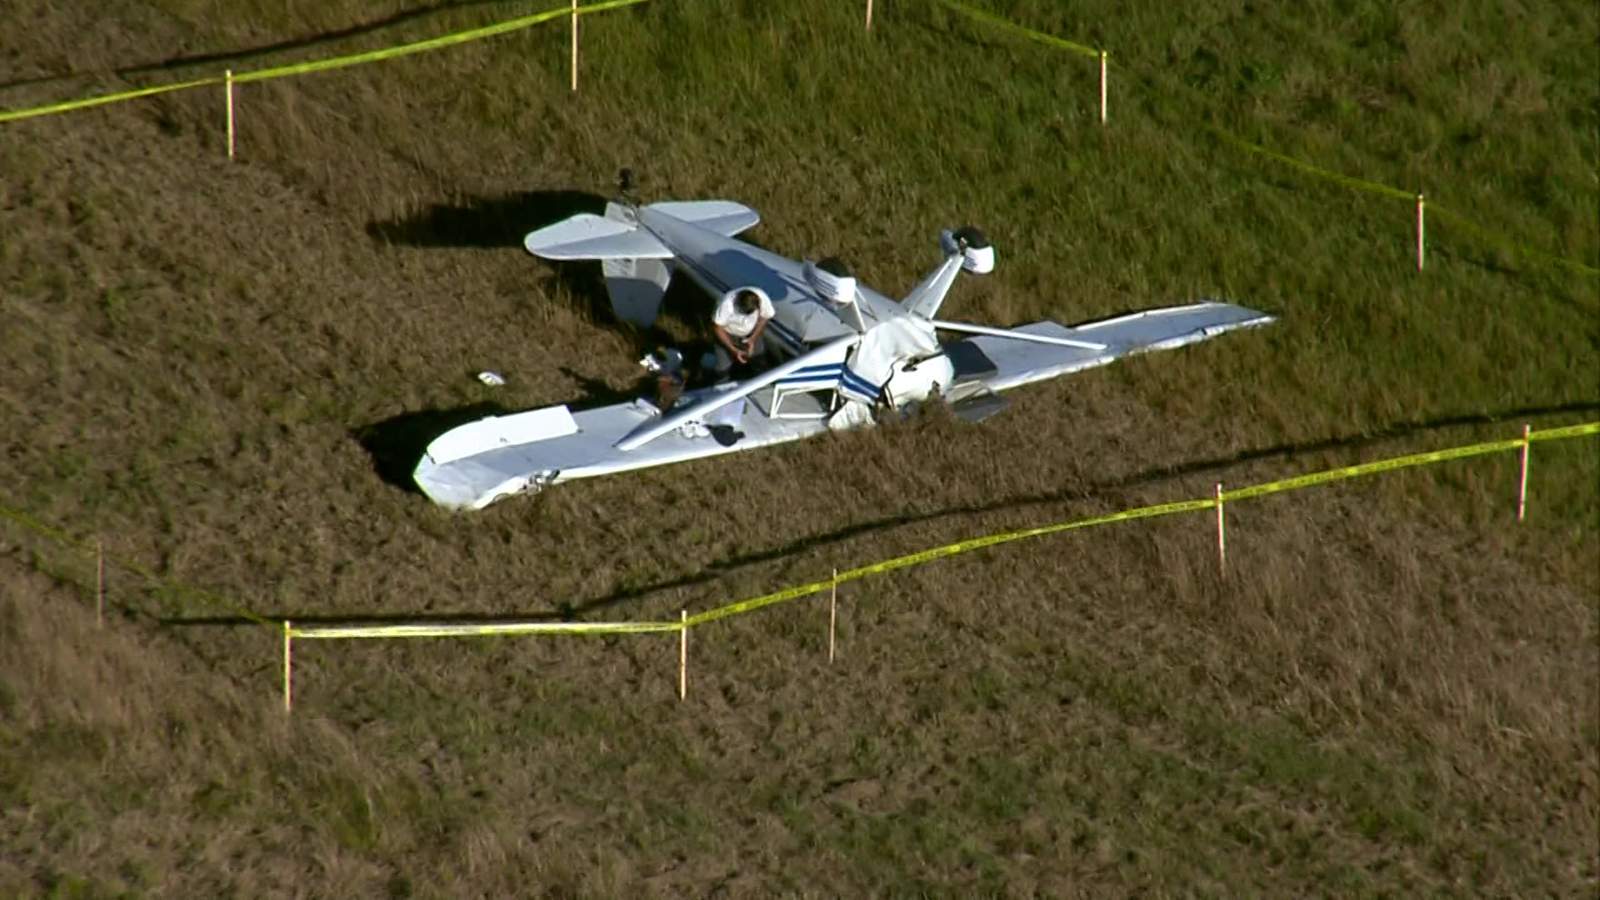 Pilot injured after single-engine plane hits power line, crashes near Manvel